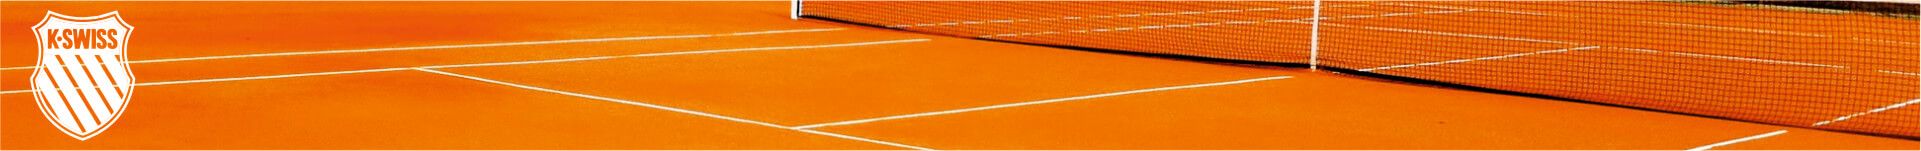 Scarpe K-Swiss - Tennis Corner